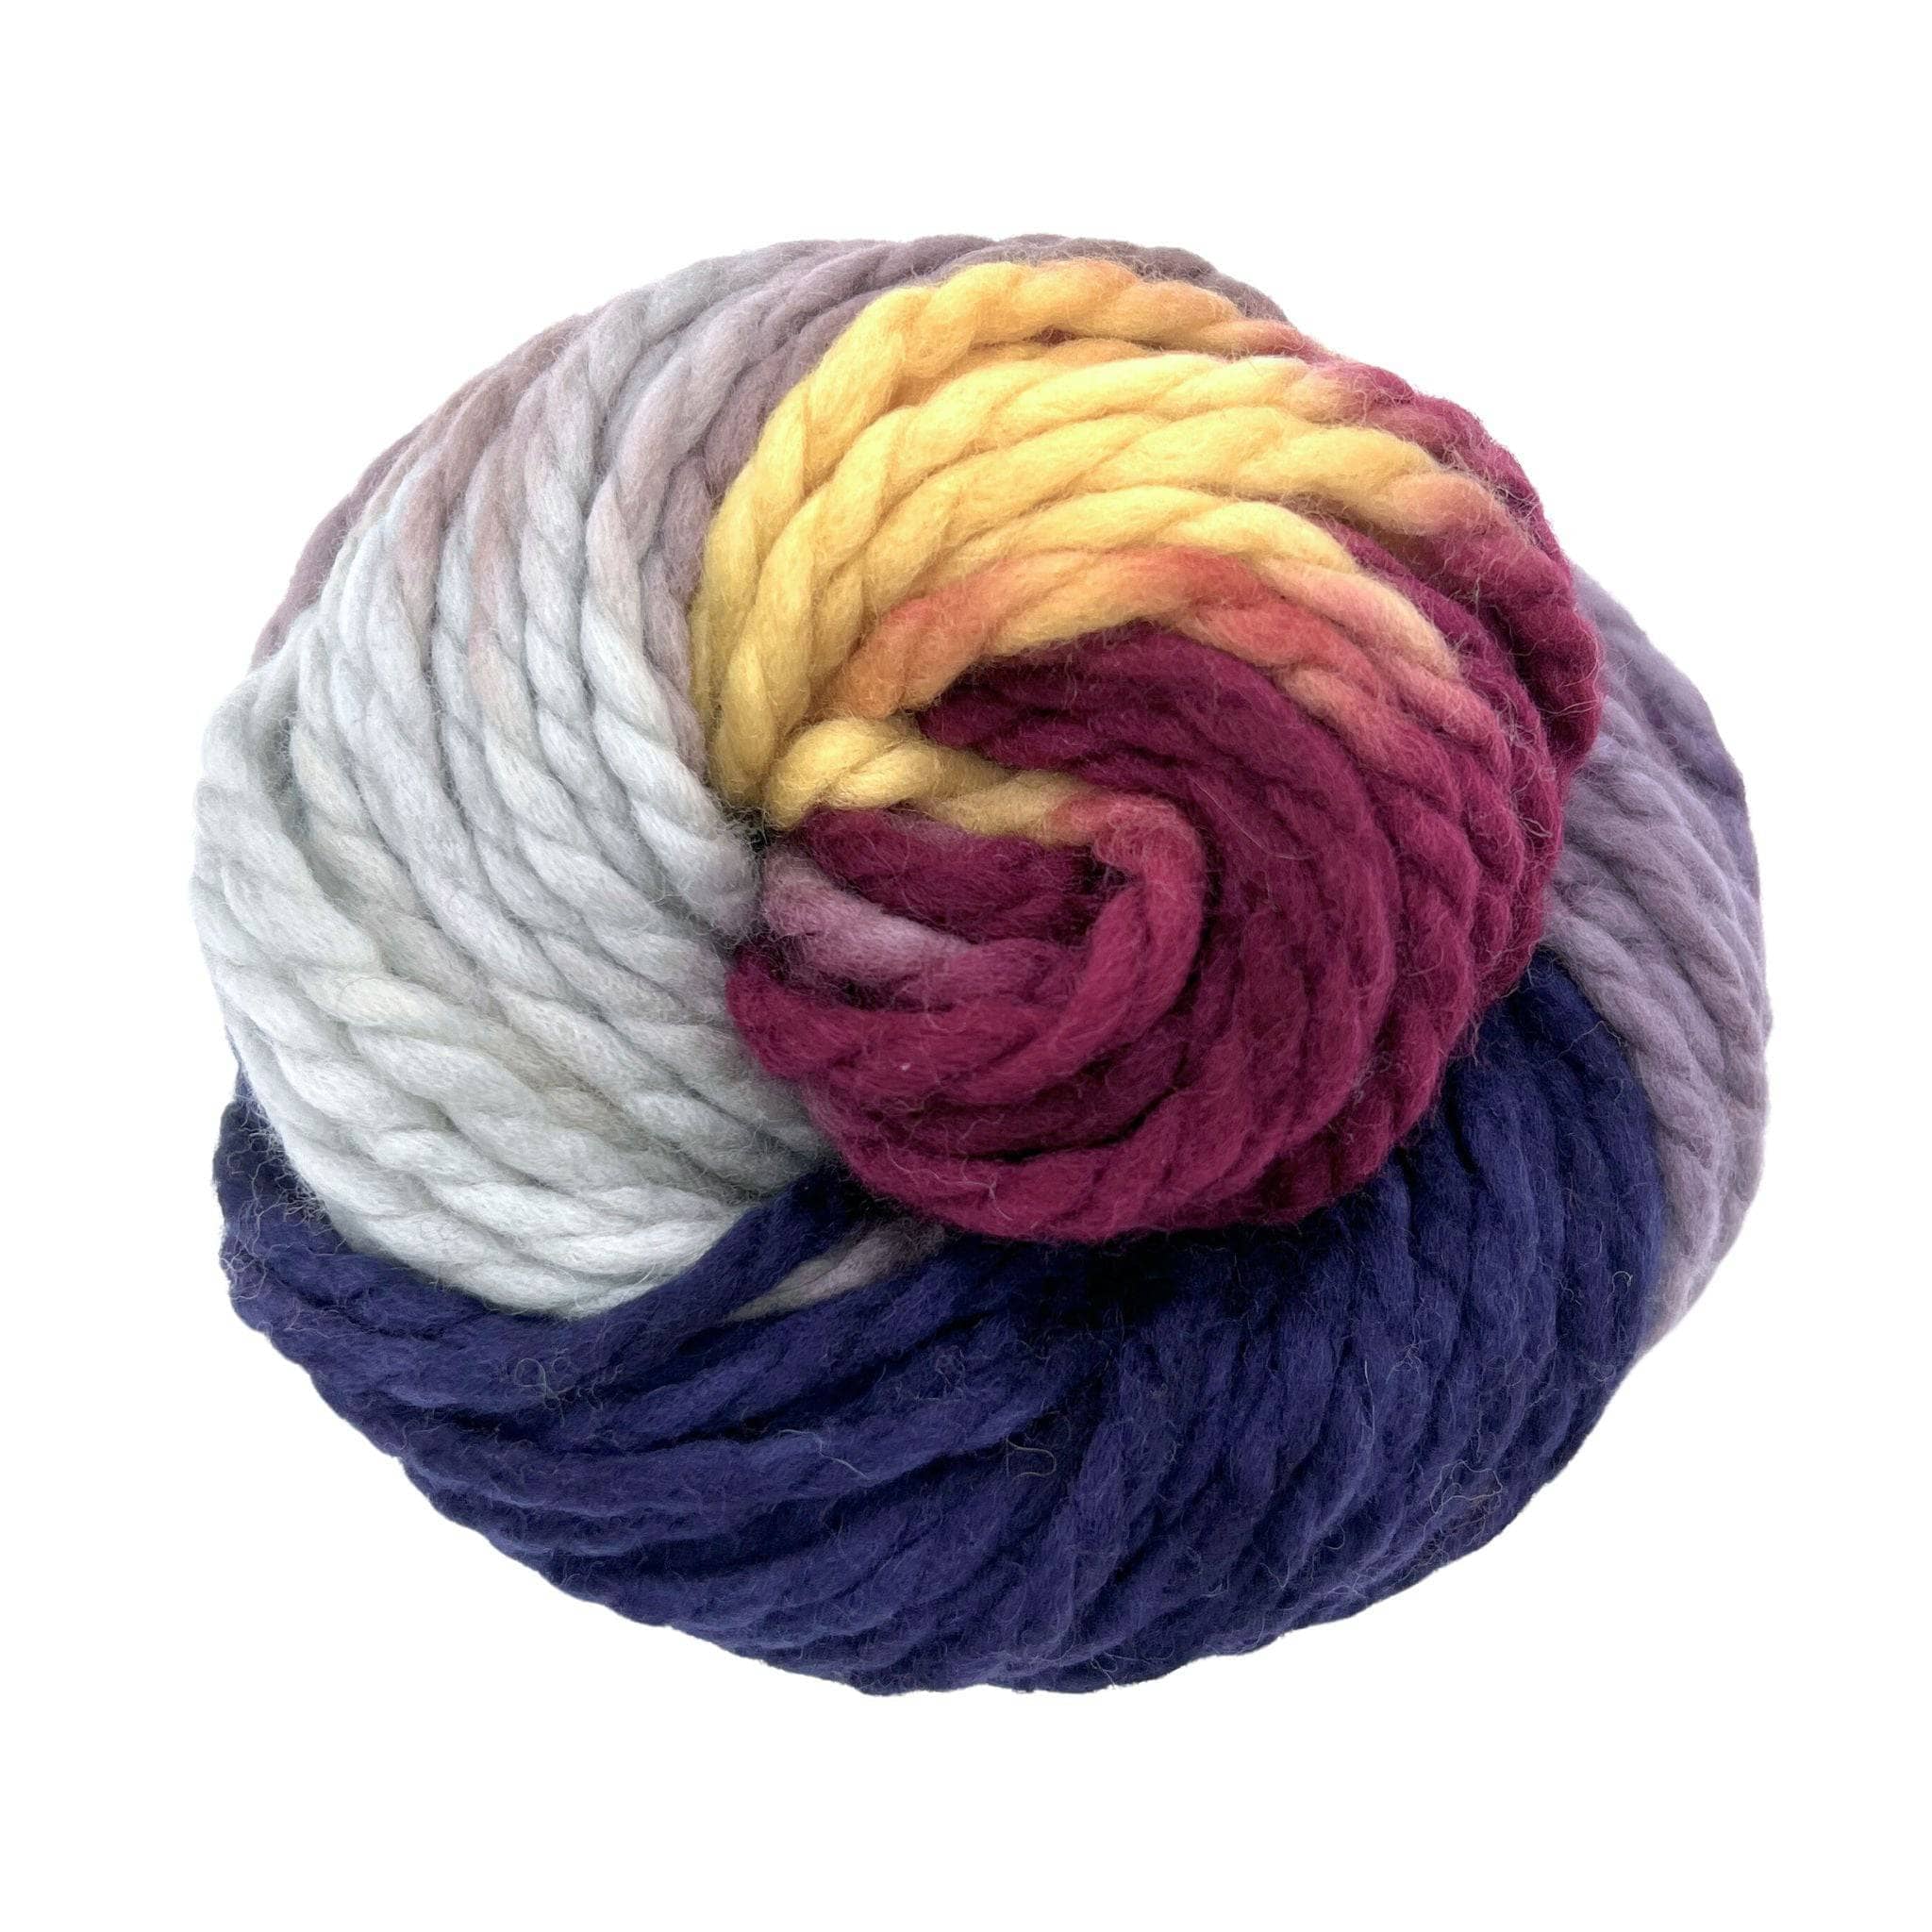 https://cdn.shopify.com/s/files/1/1346/5473/products/super-bulky-highland-wool-yarn-full-sun-eco-friendly-yarn-crochet-knit-boho-plus-size-womens-clothing-156969.jpg?v=1699884425